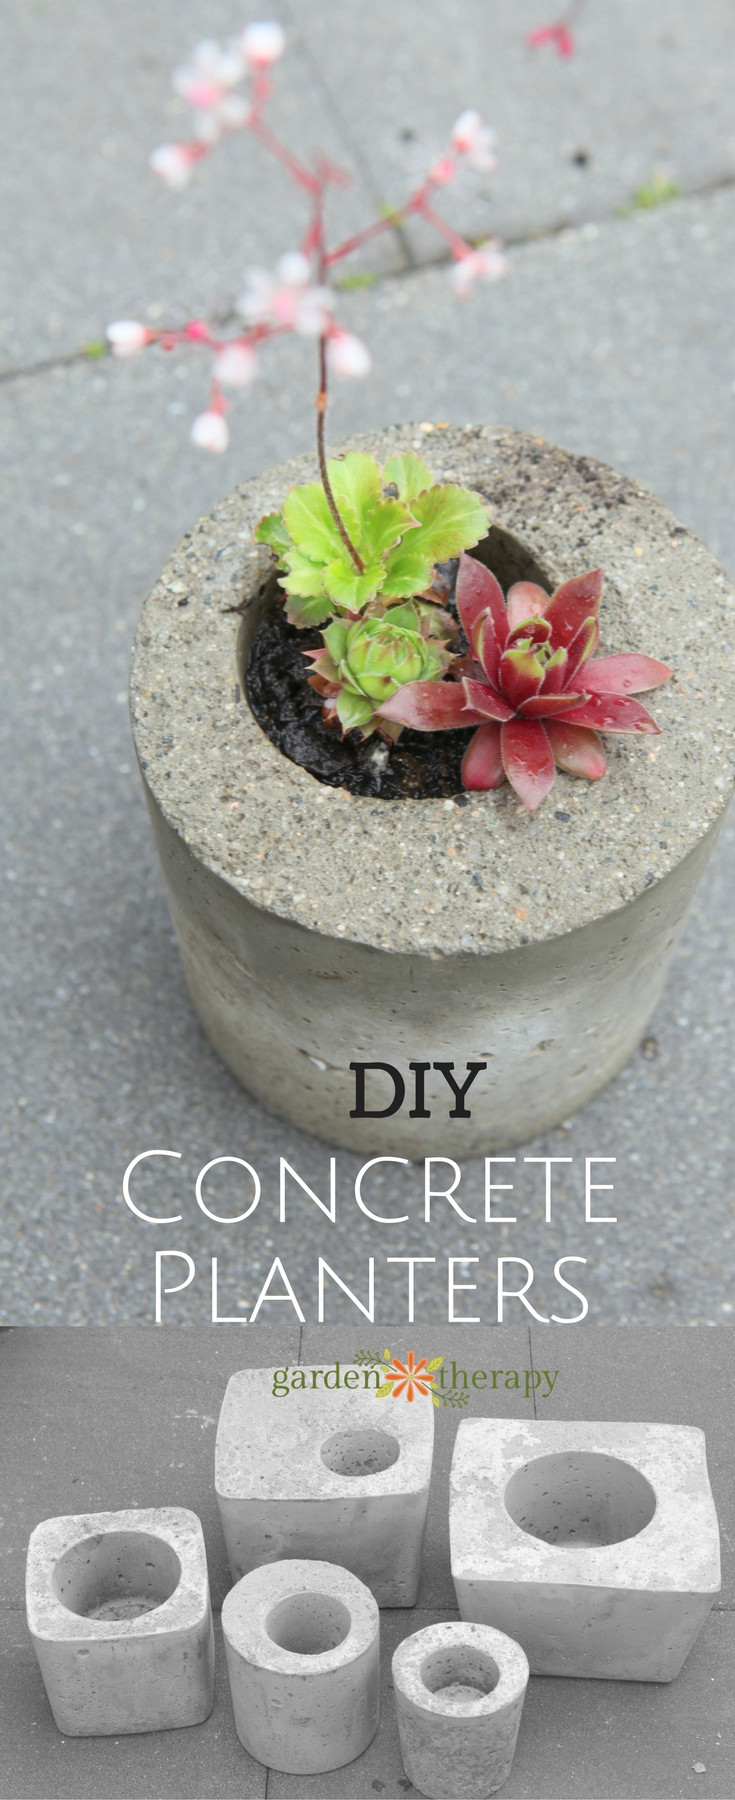 Outdoor Planters DIY
 How to Make Concrete Planters